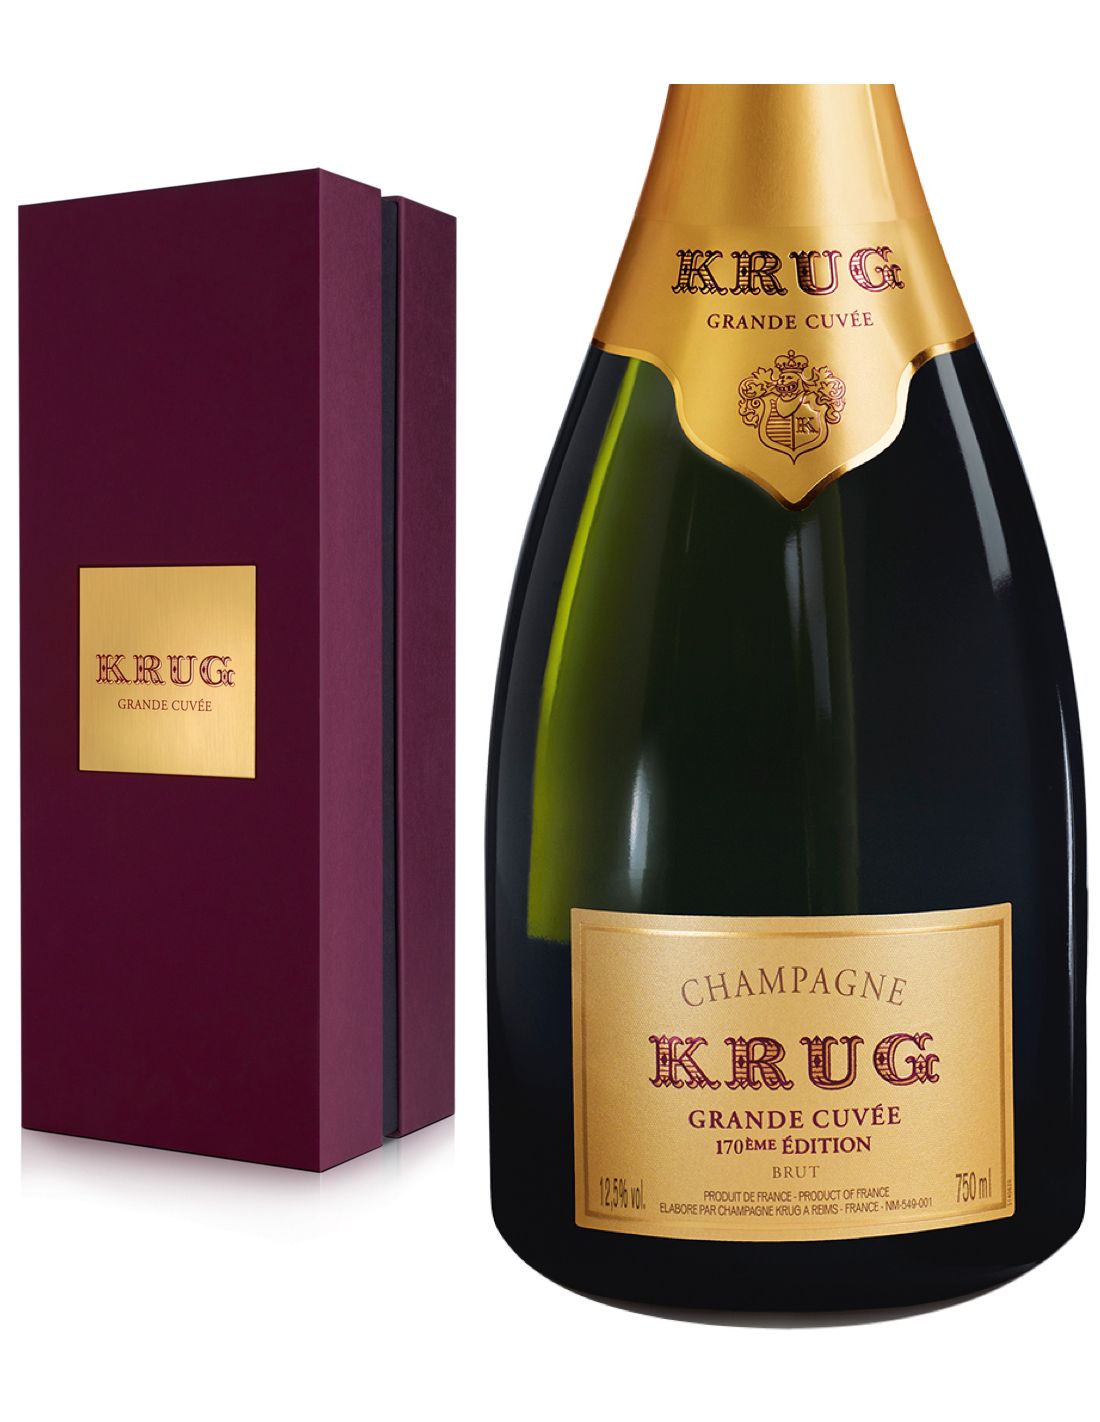 Krug Grande Cuvee 170th Edition with box (RP: 95)